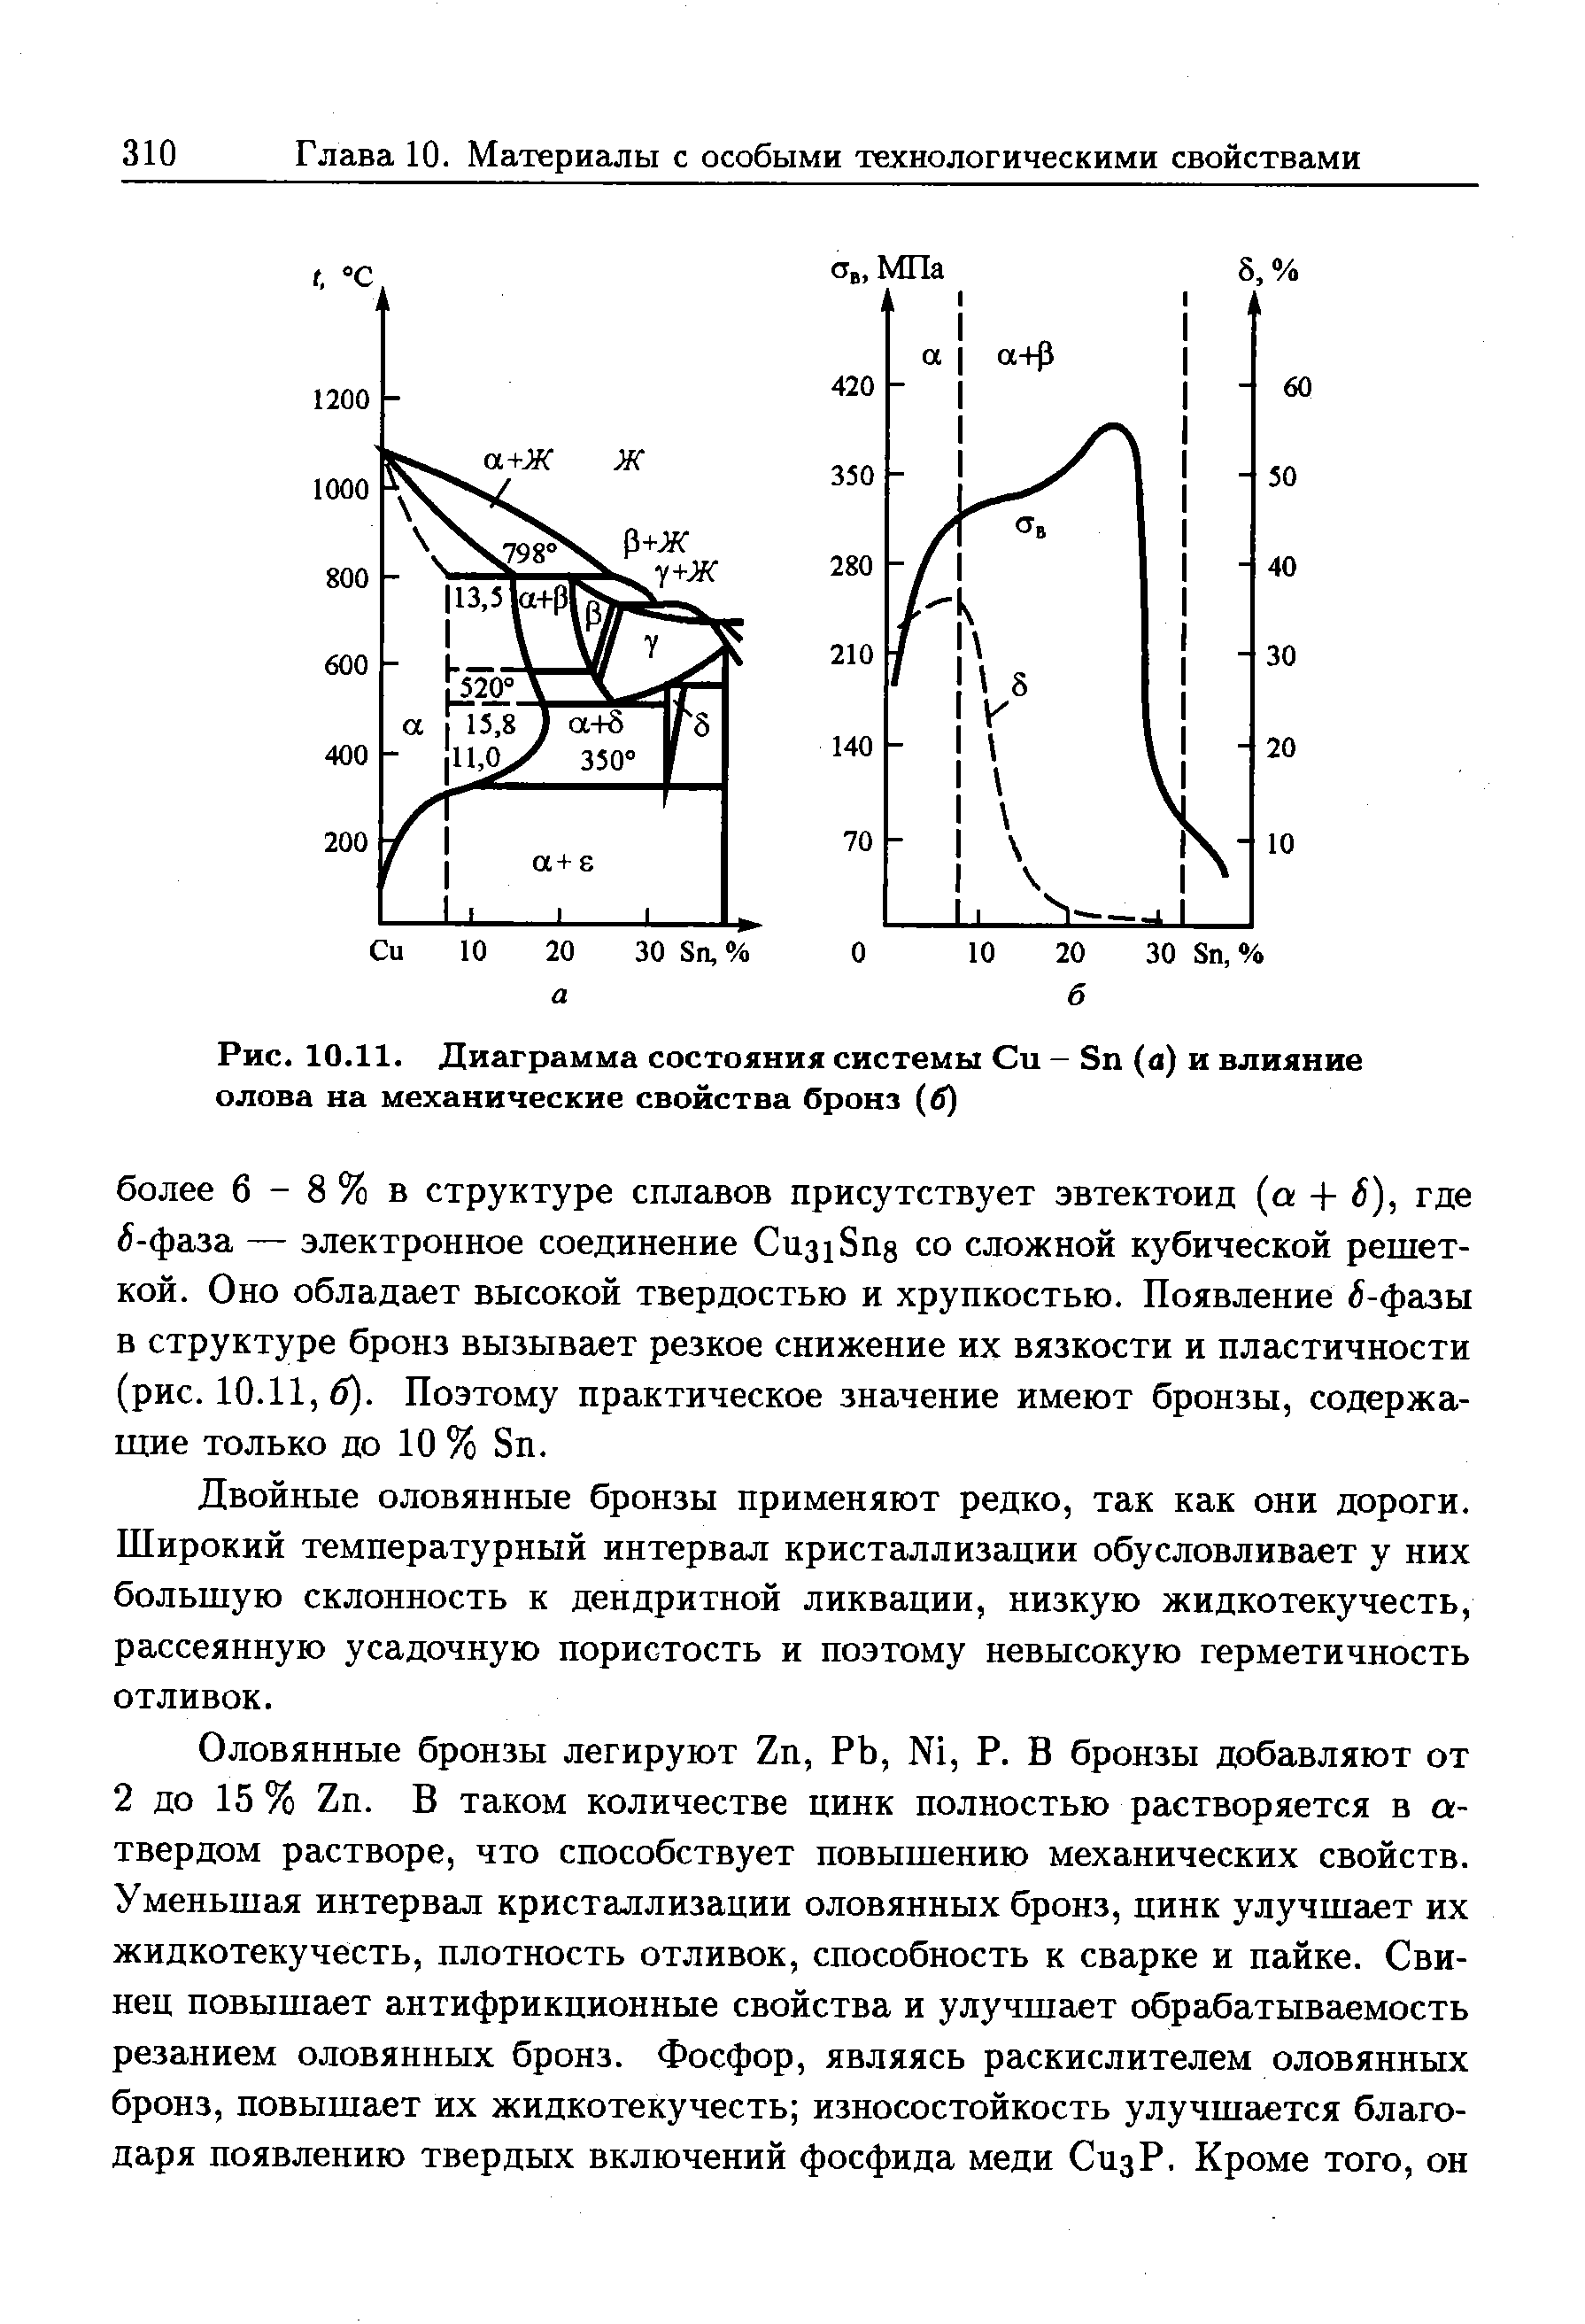 Рис. 10.11. Диаграмма состояния системы Си - Sn (а) и влияние олова на механические свойства бронз (б)
